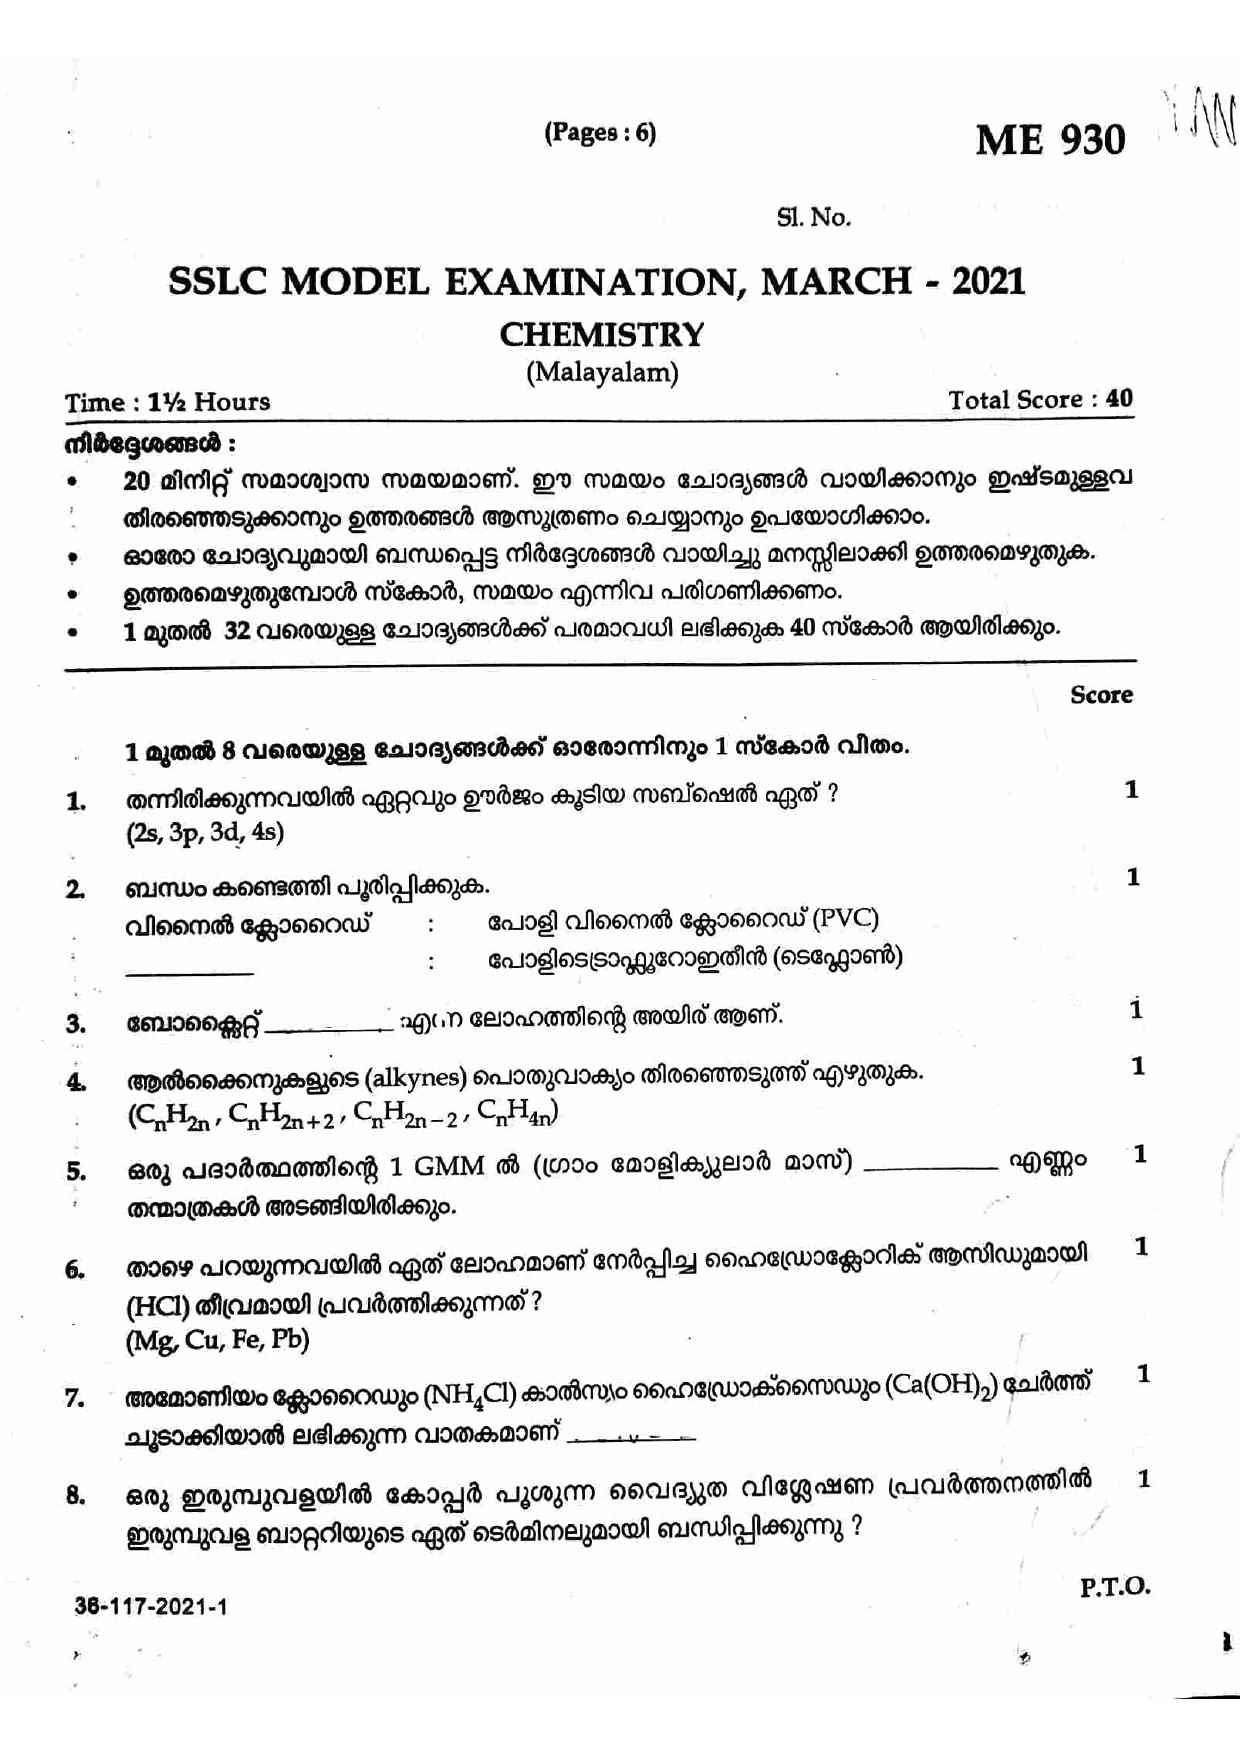 Kerala SSLC 2021 Chemistry Question Paper (MM) (Model) - Page 1